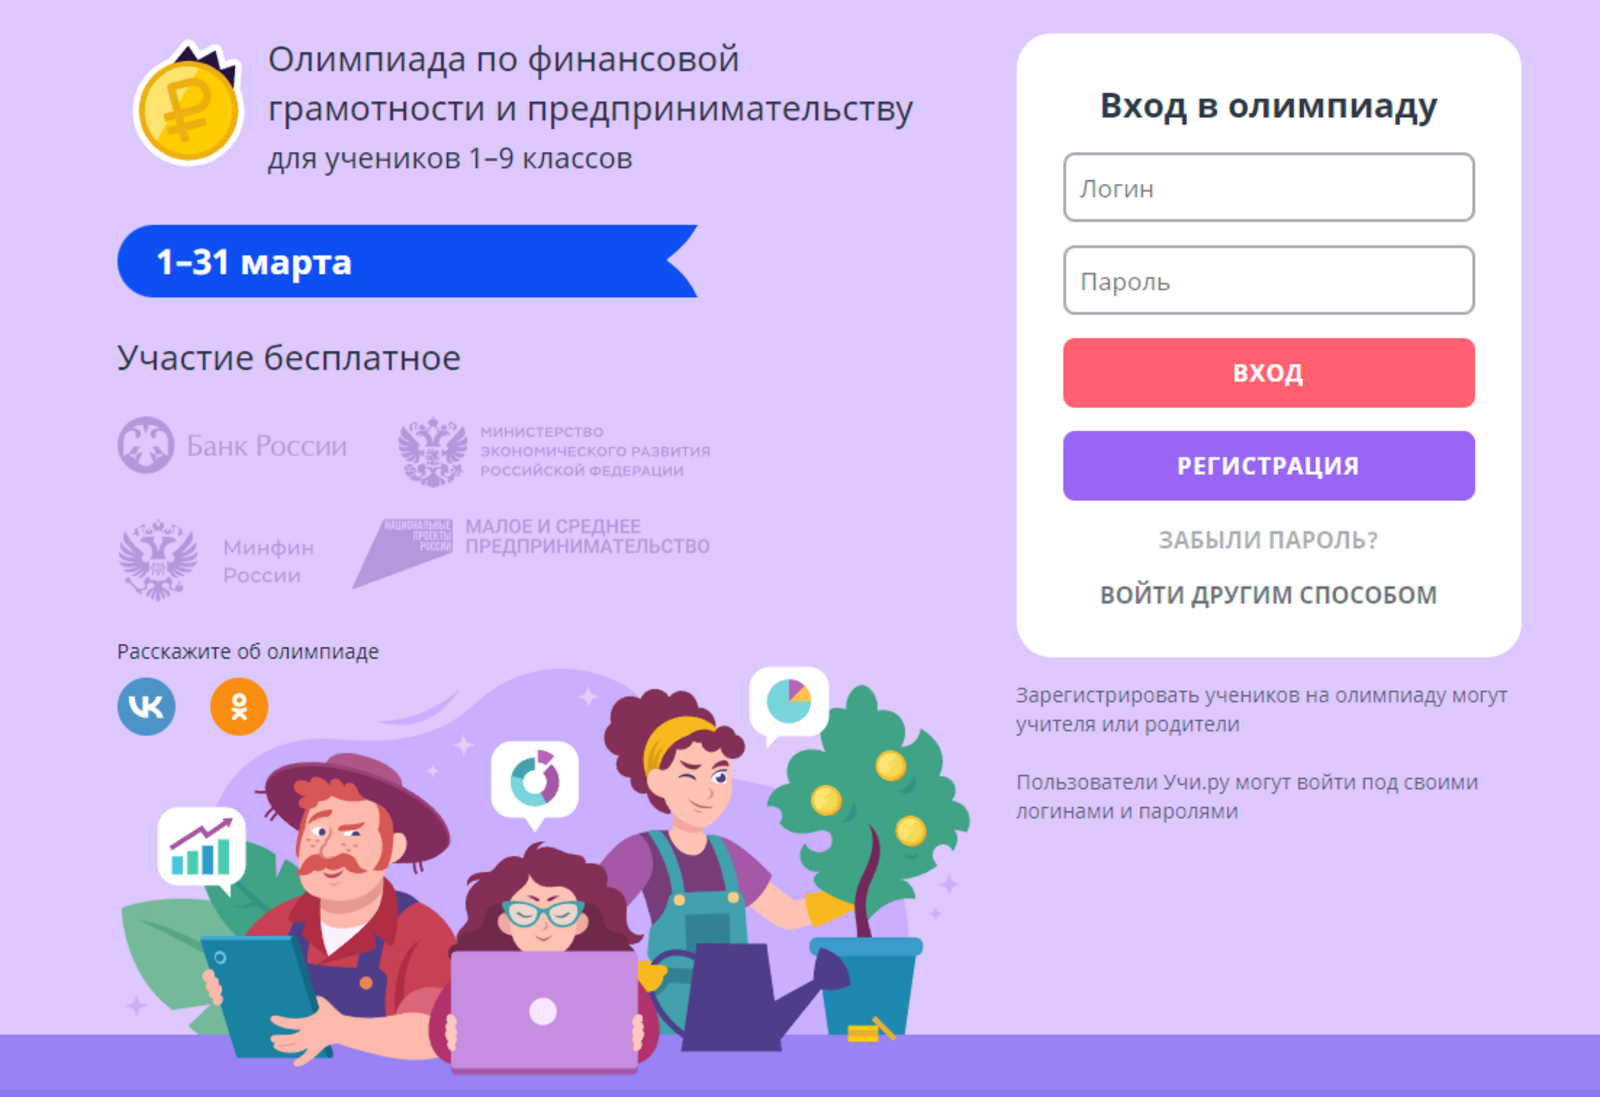 Учи.ру запустило на своей площадке олимпиаду по финграмотности среди школьников Башкирии